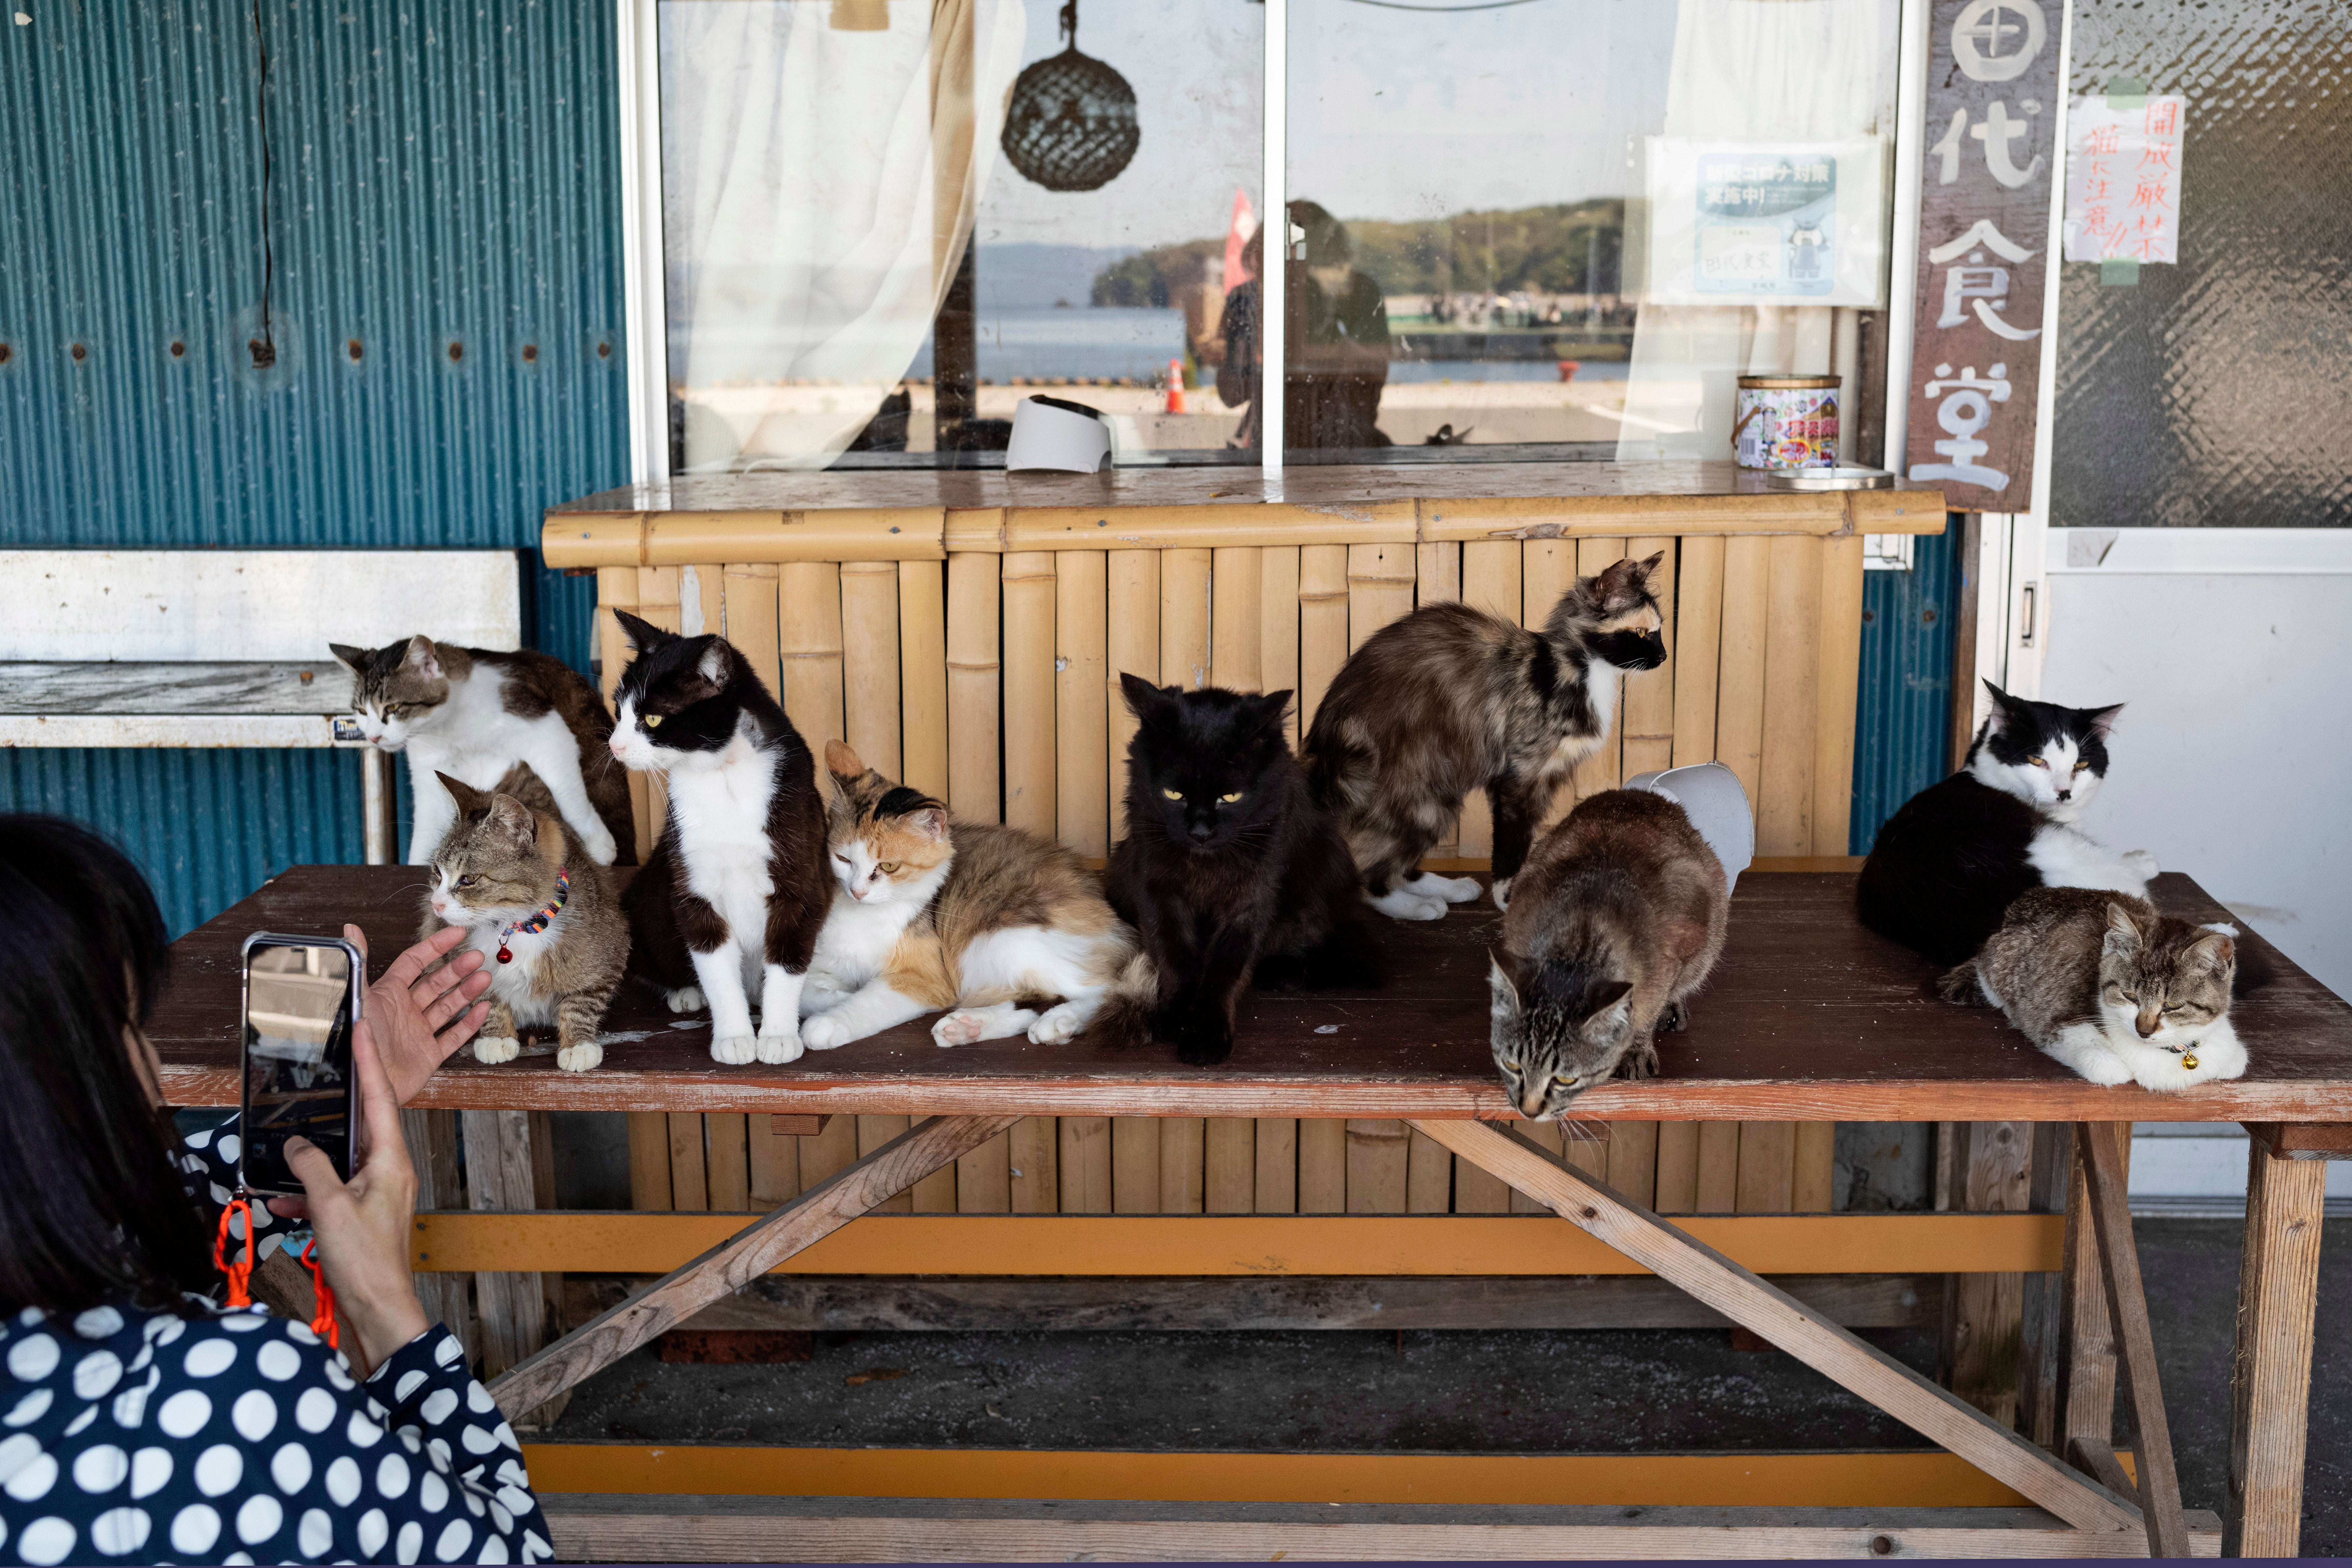 The “Neko Jinja,” or cat shrine, honours the animals’ presence